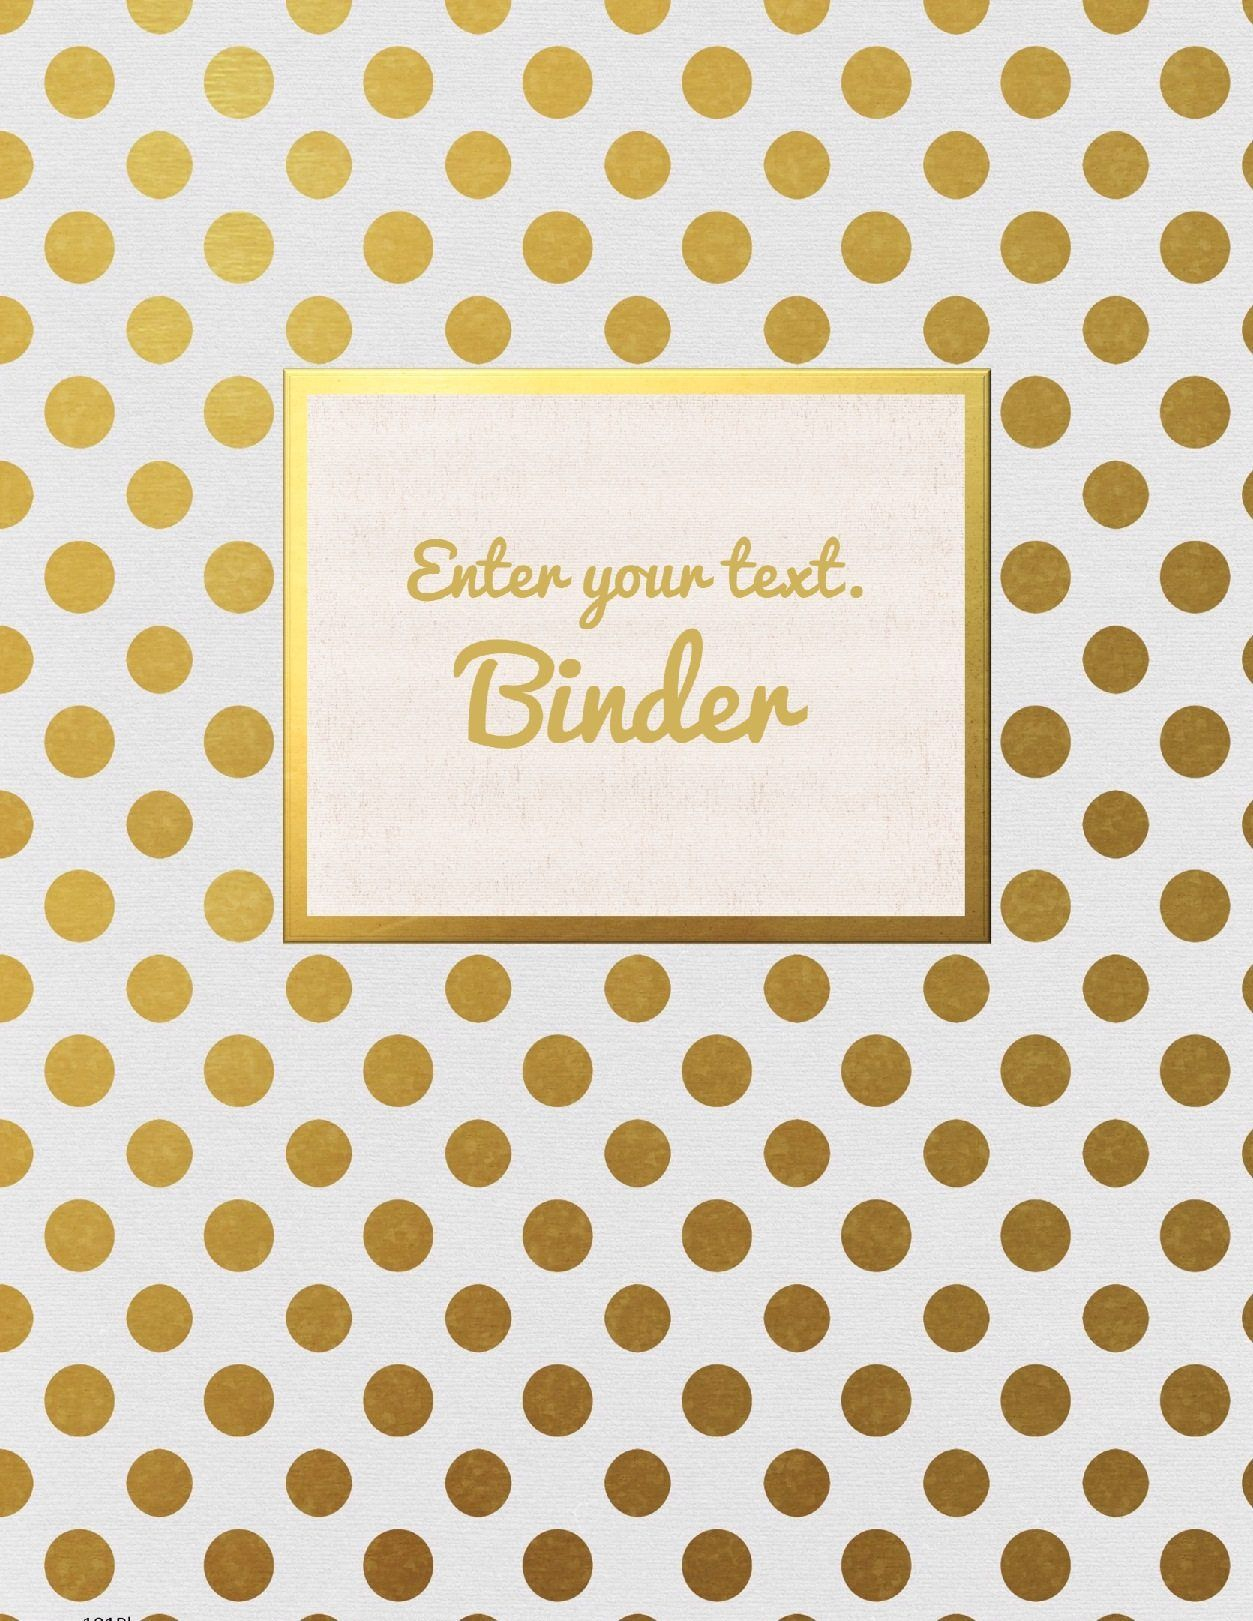 Free Binder Cover Templates | Art And Design | Pinterest | Binder - Free Printable Customizable Binder Covers